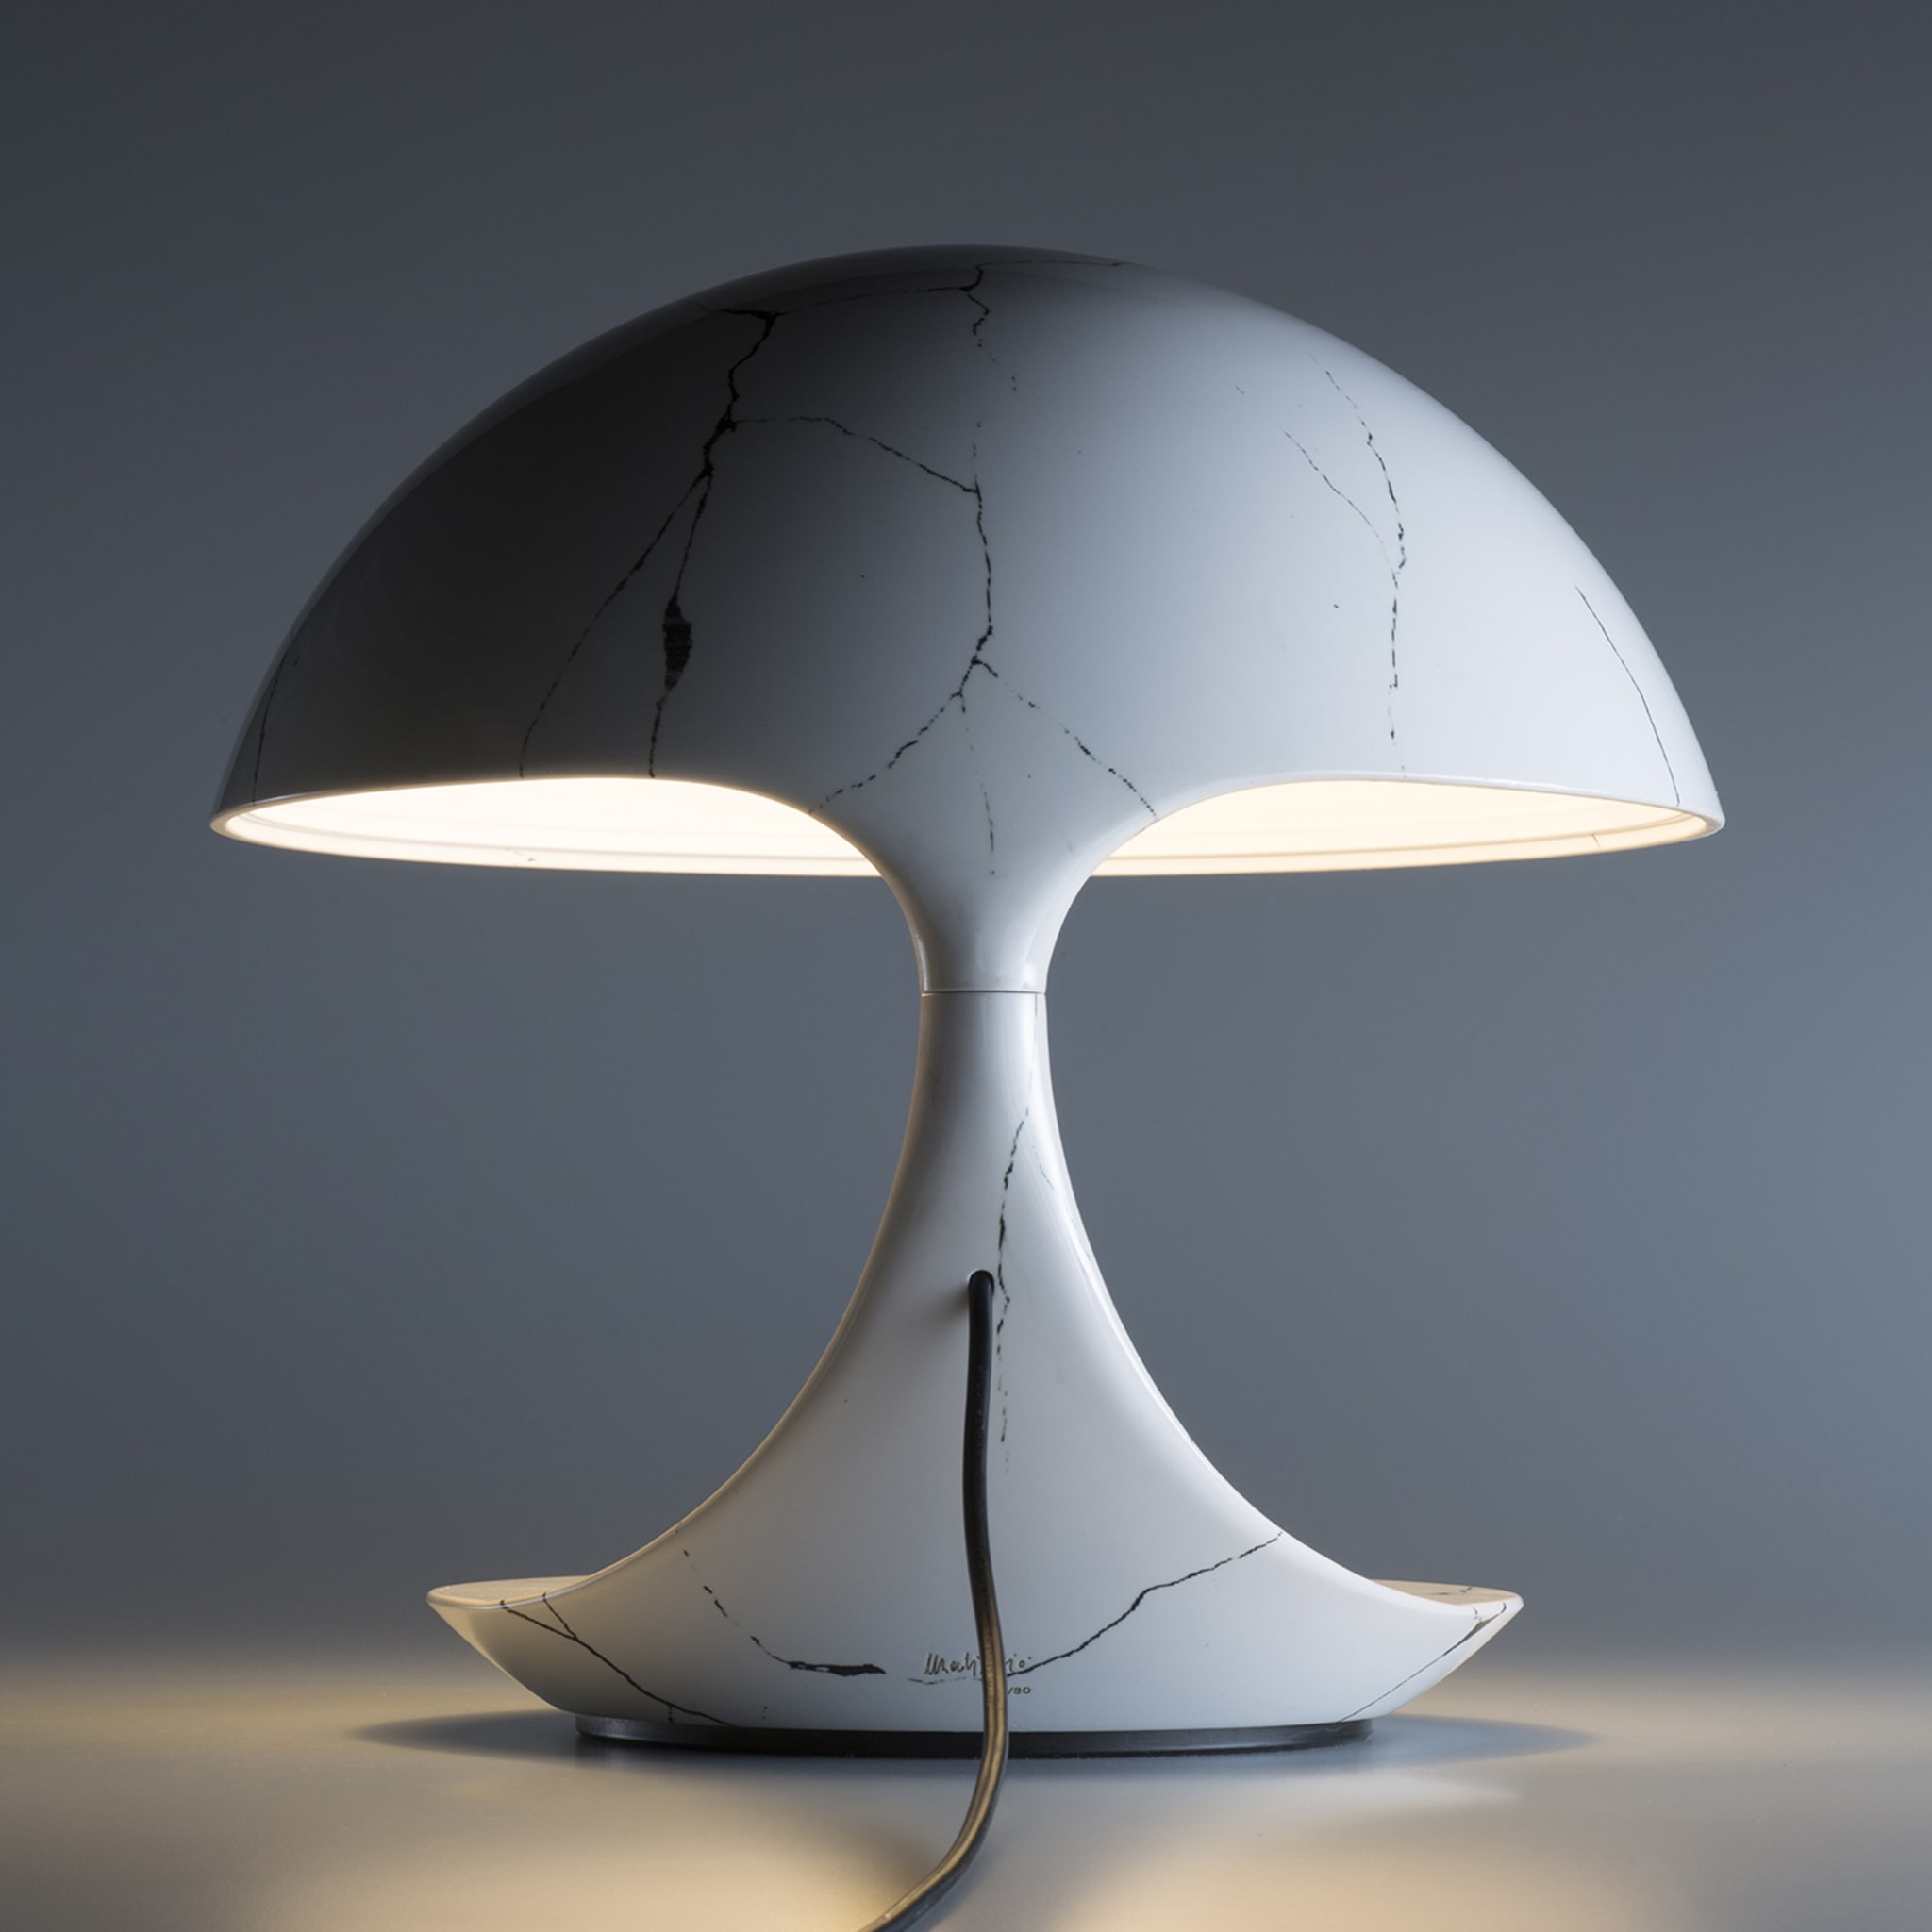 Cobra Texture Kintsugi Table Lamp by Paolo Orlandini - Alternative view 4